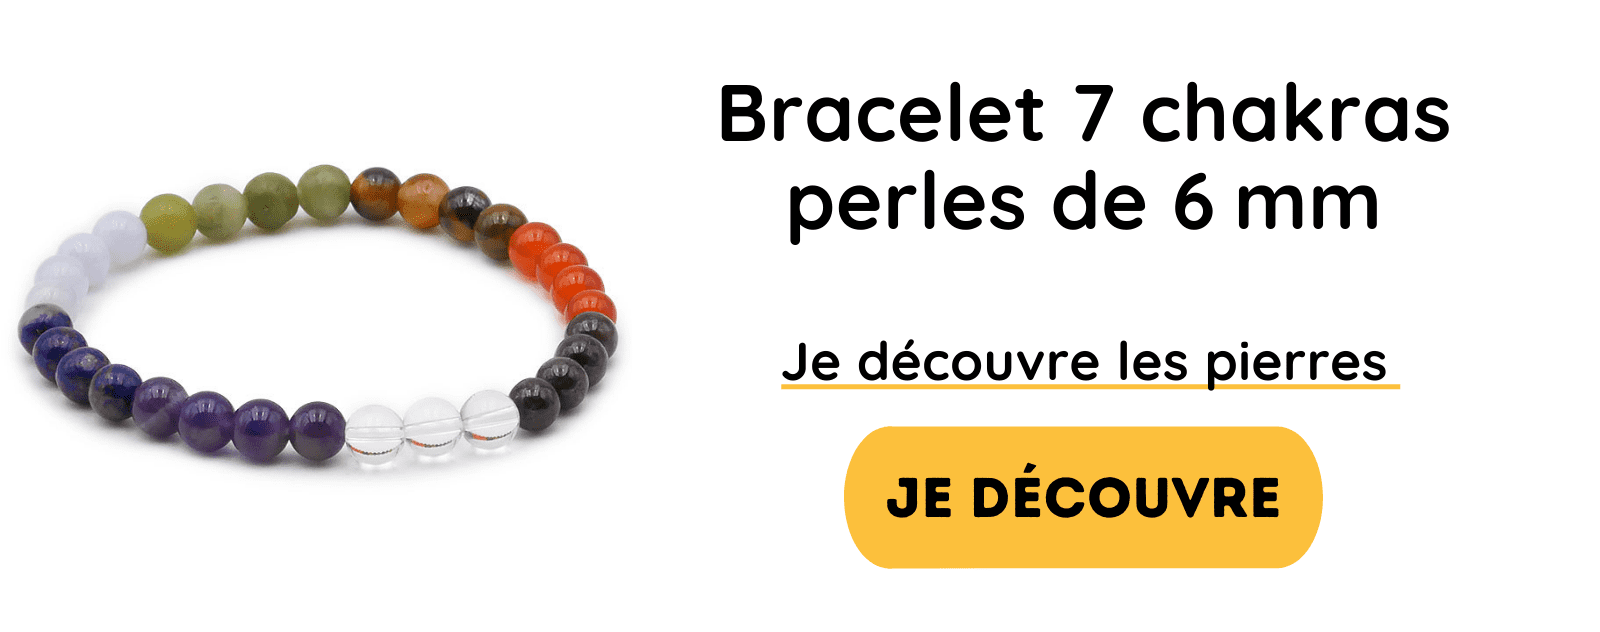 bracelet 7 chakras